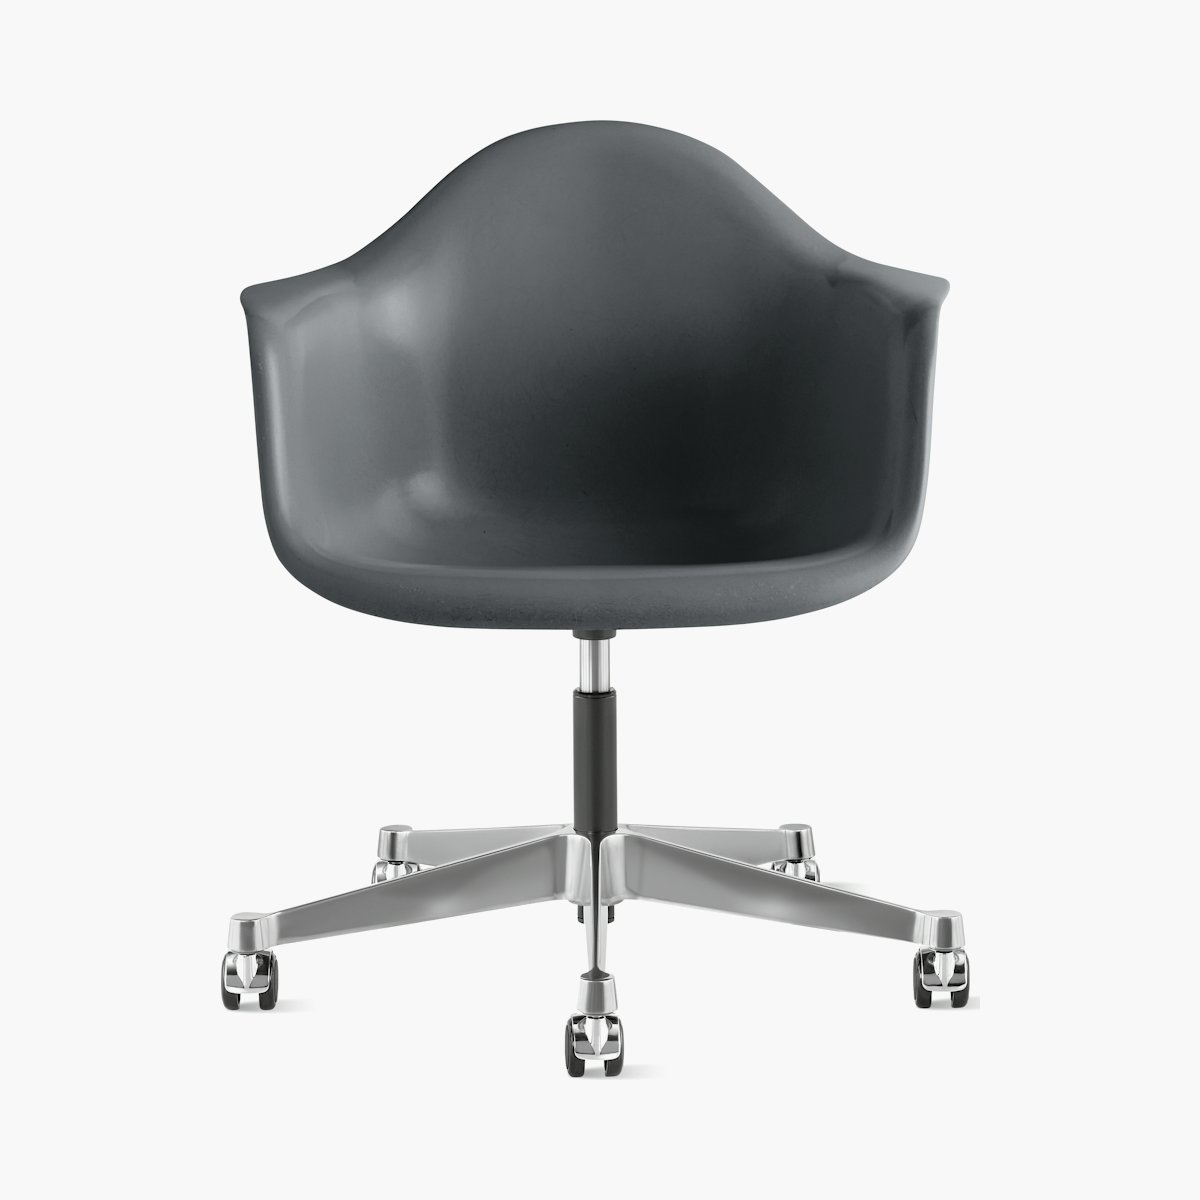 Eames Task Chair, Molded Fiberglass Armchair